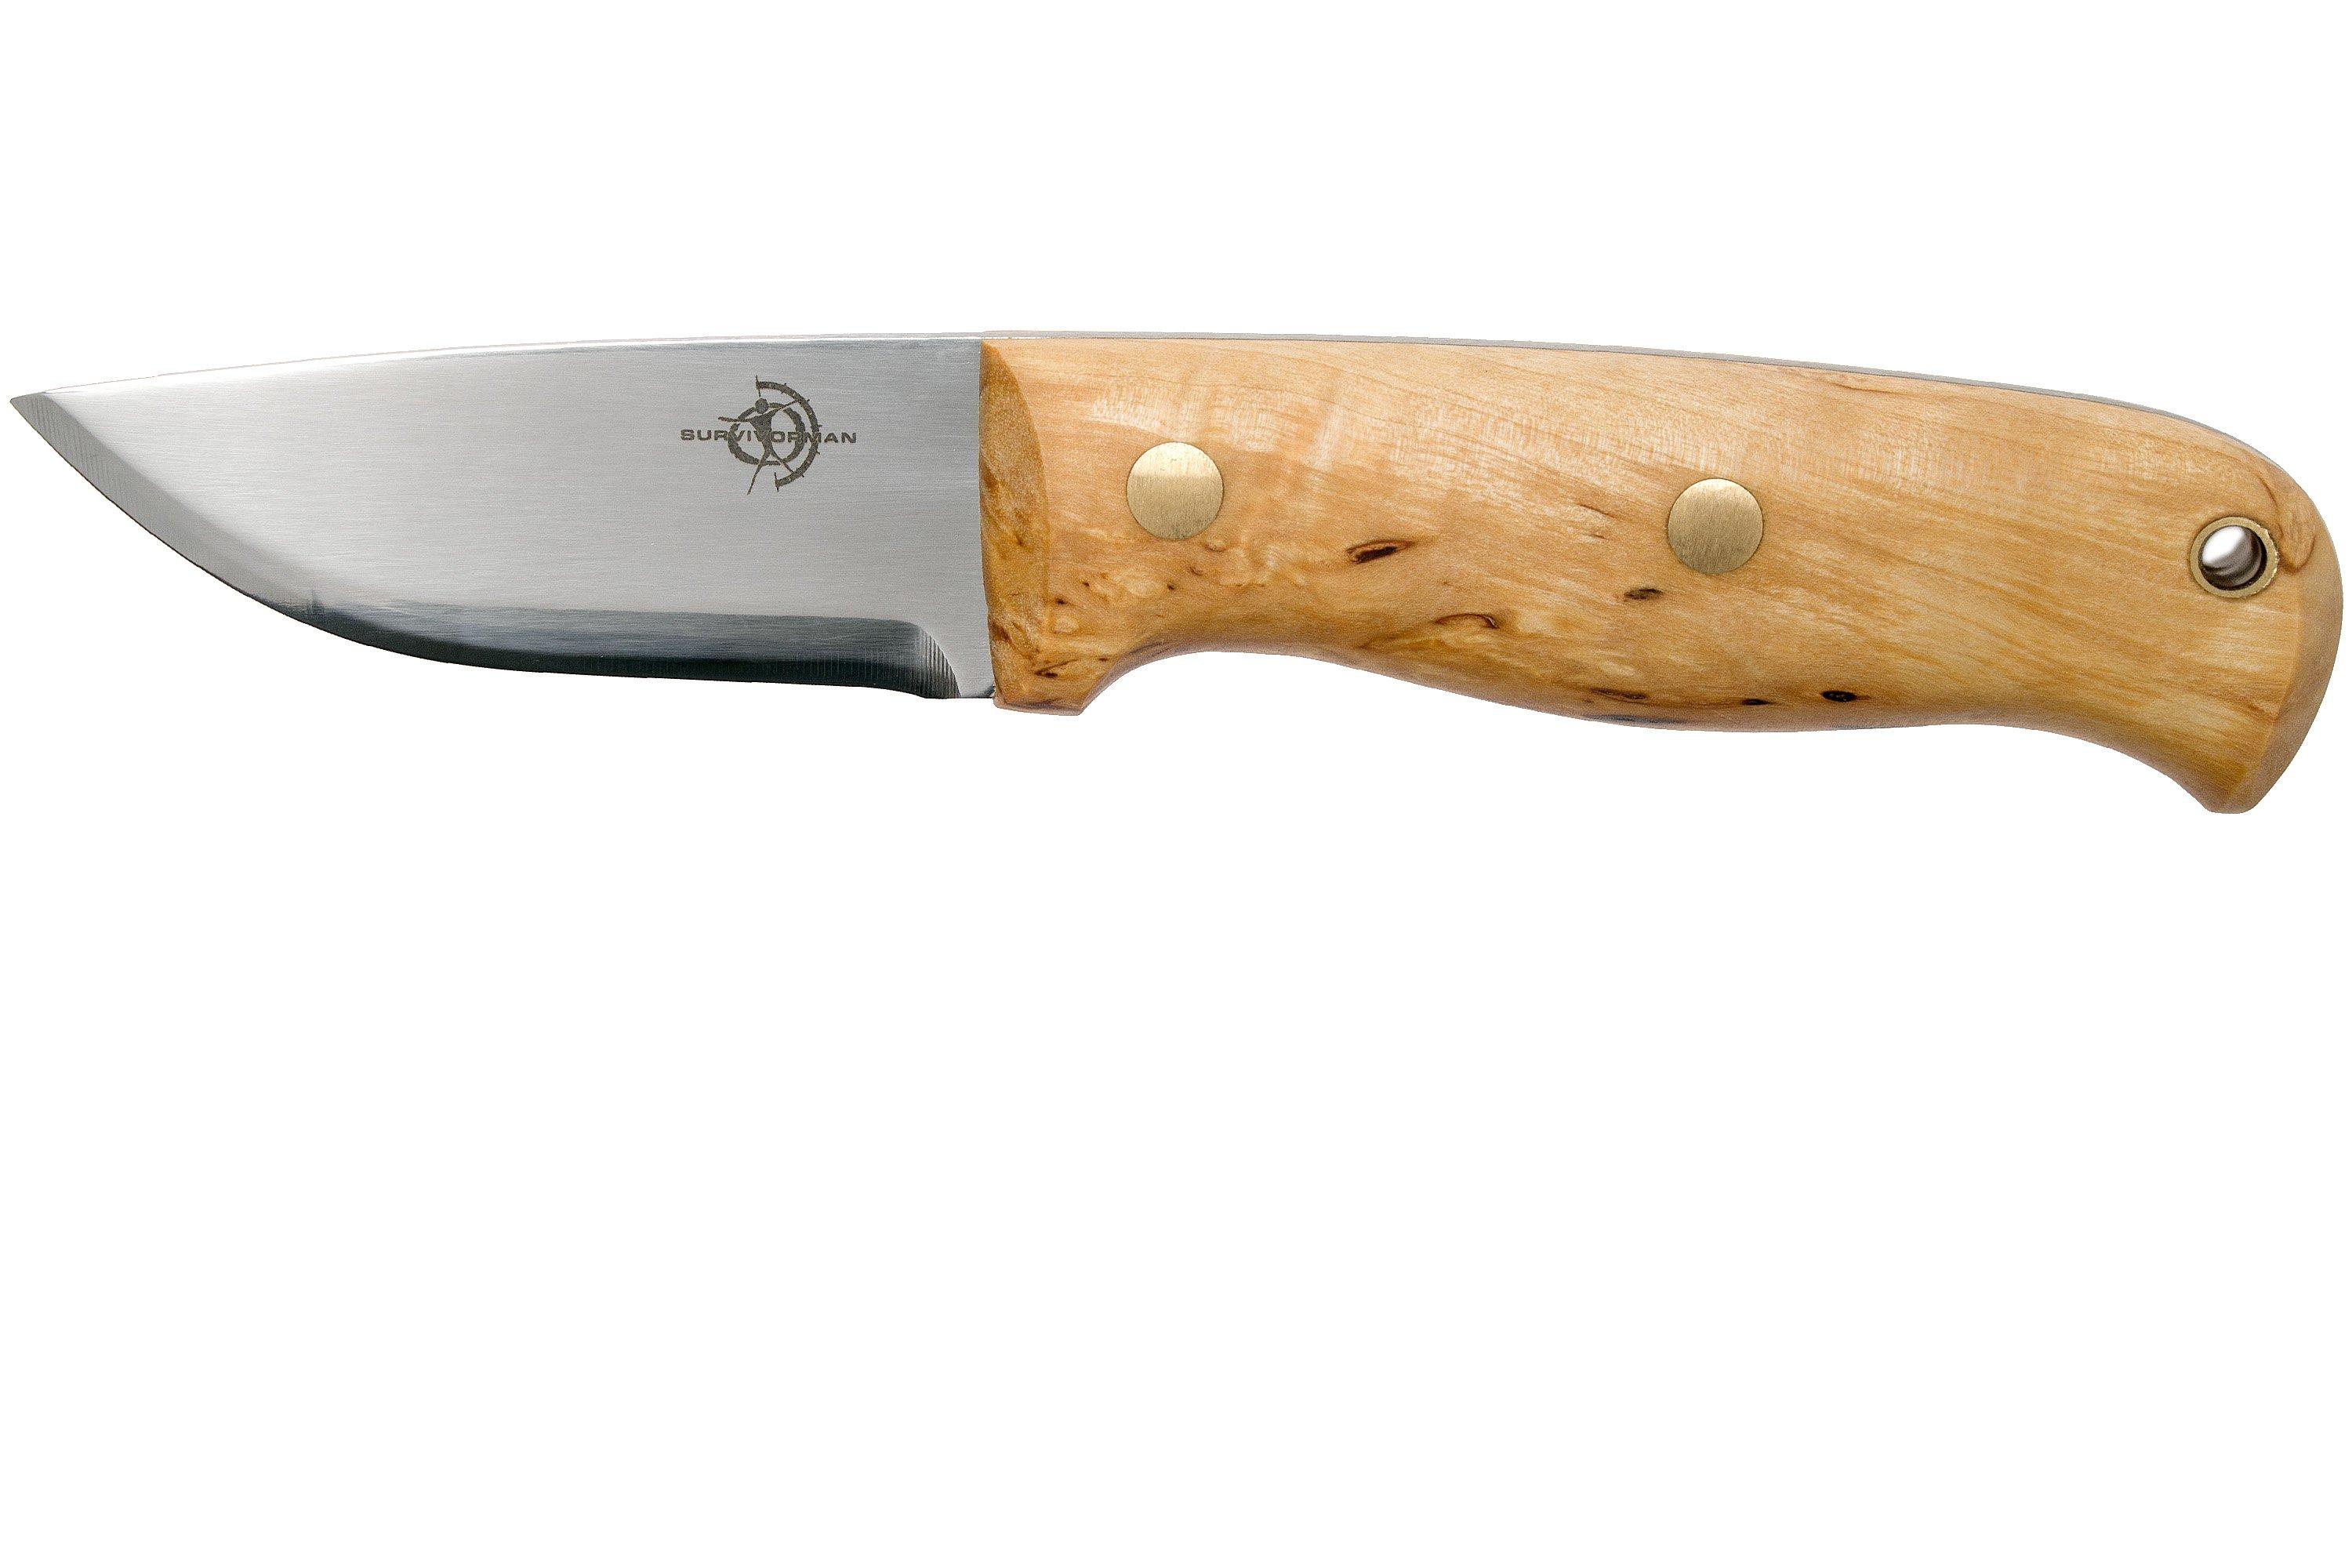 Helle Wabakimi 630 bushcraft knife, Les Stroud design | Advantageously  shopping at Knivesandtools.com